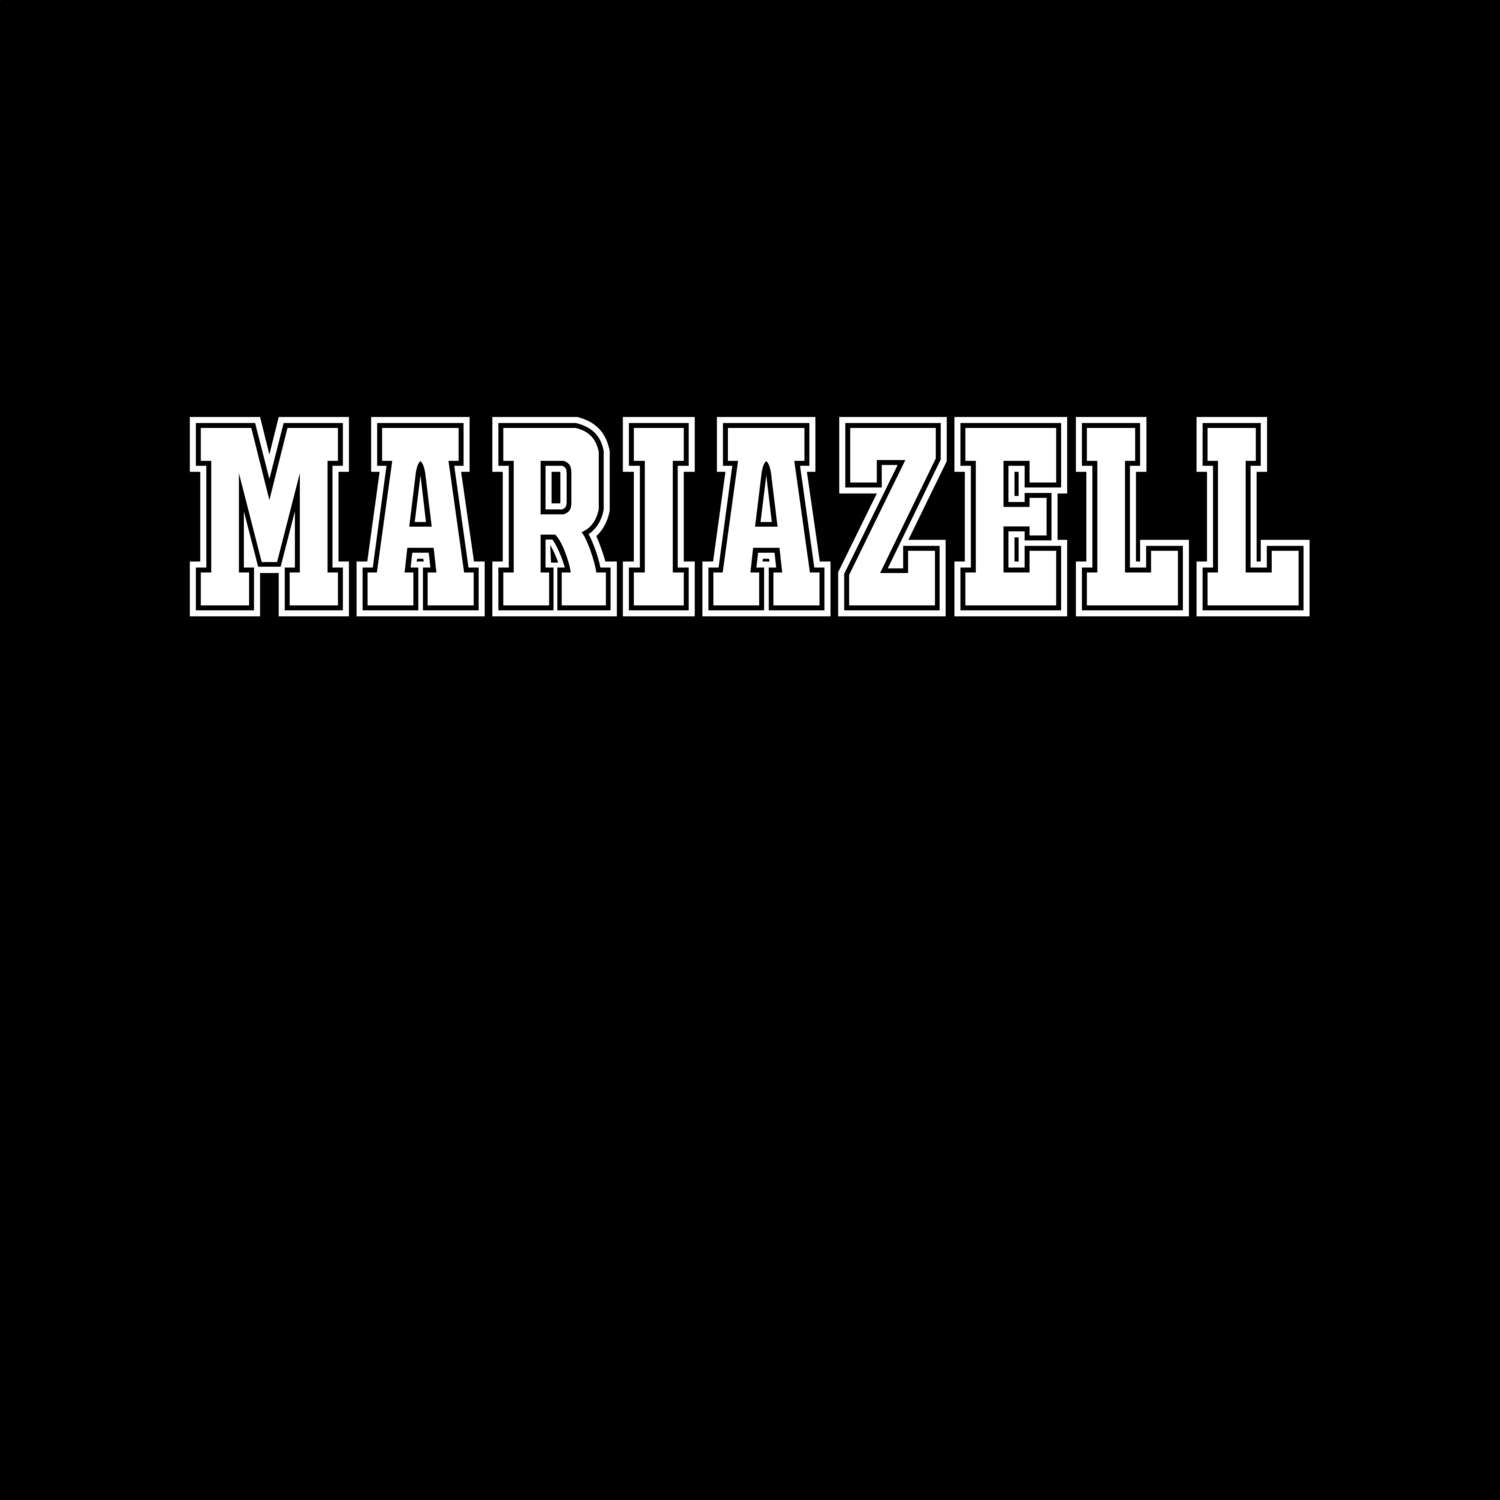 Mariazell T-Shirt »Classic«